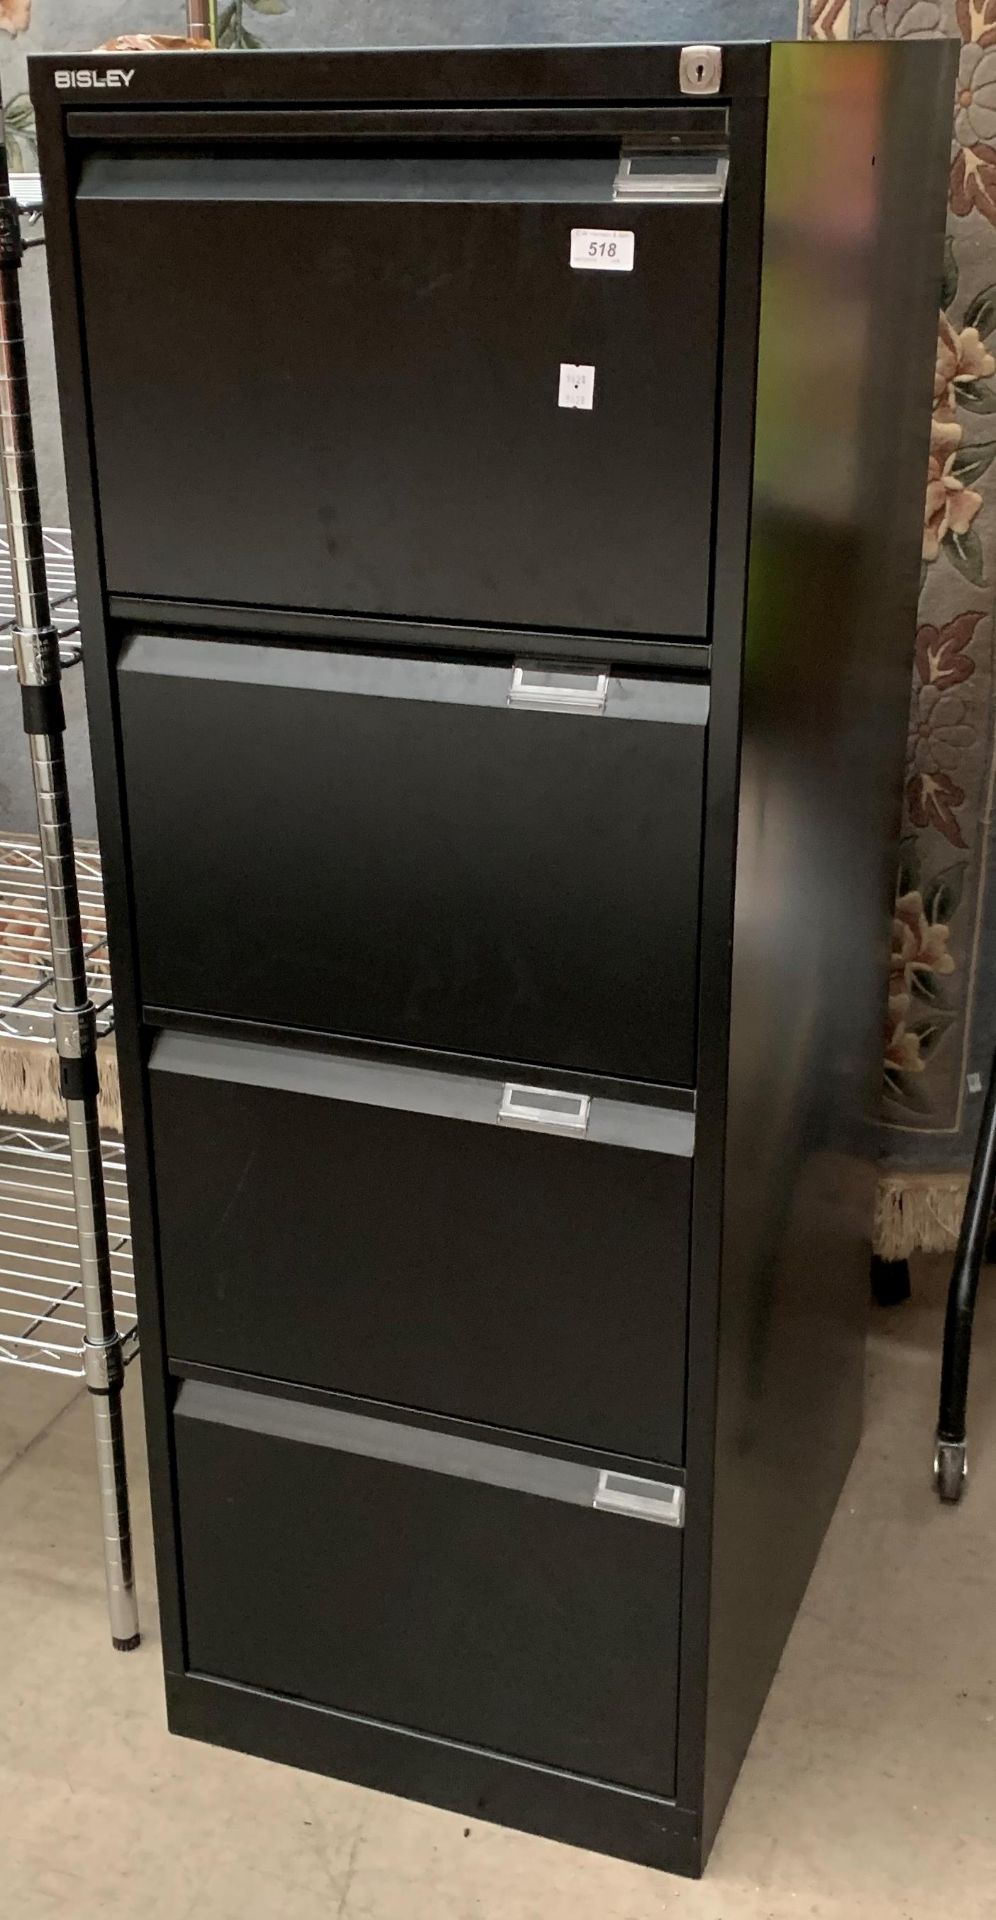 A Bisley black metal four drawer filing cabinet